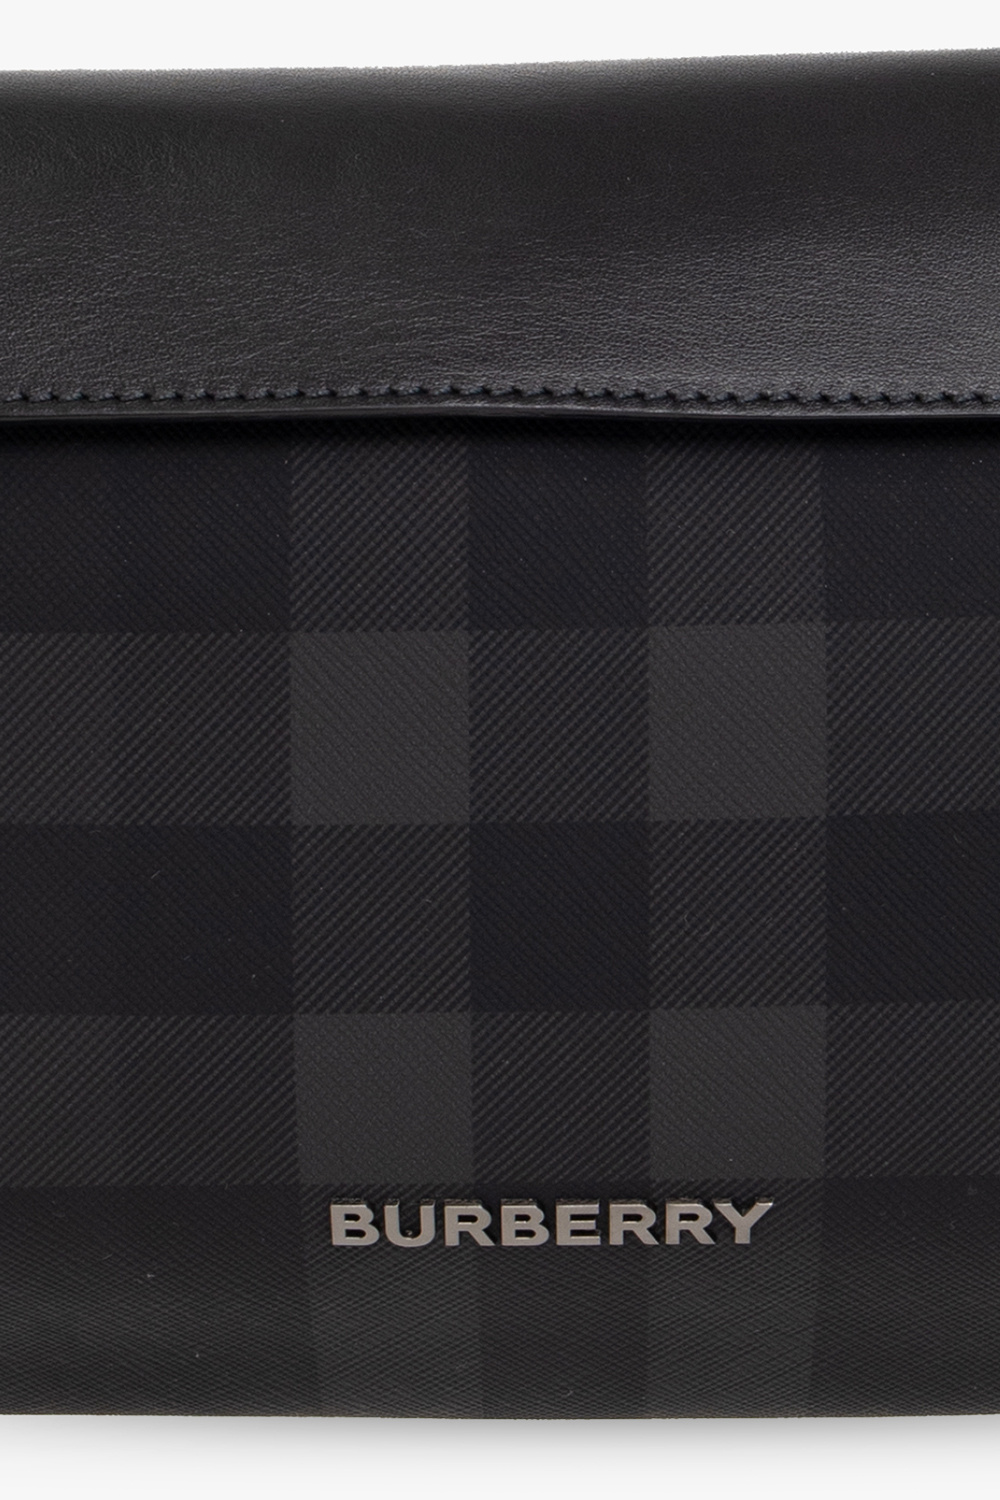 burberry Sneakers Belt bag